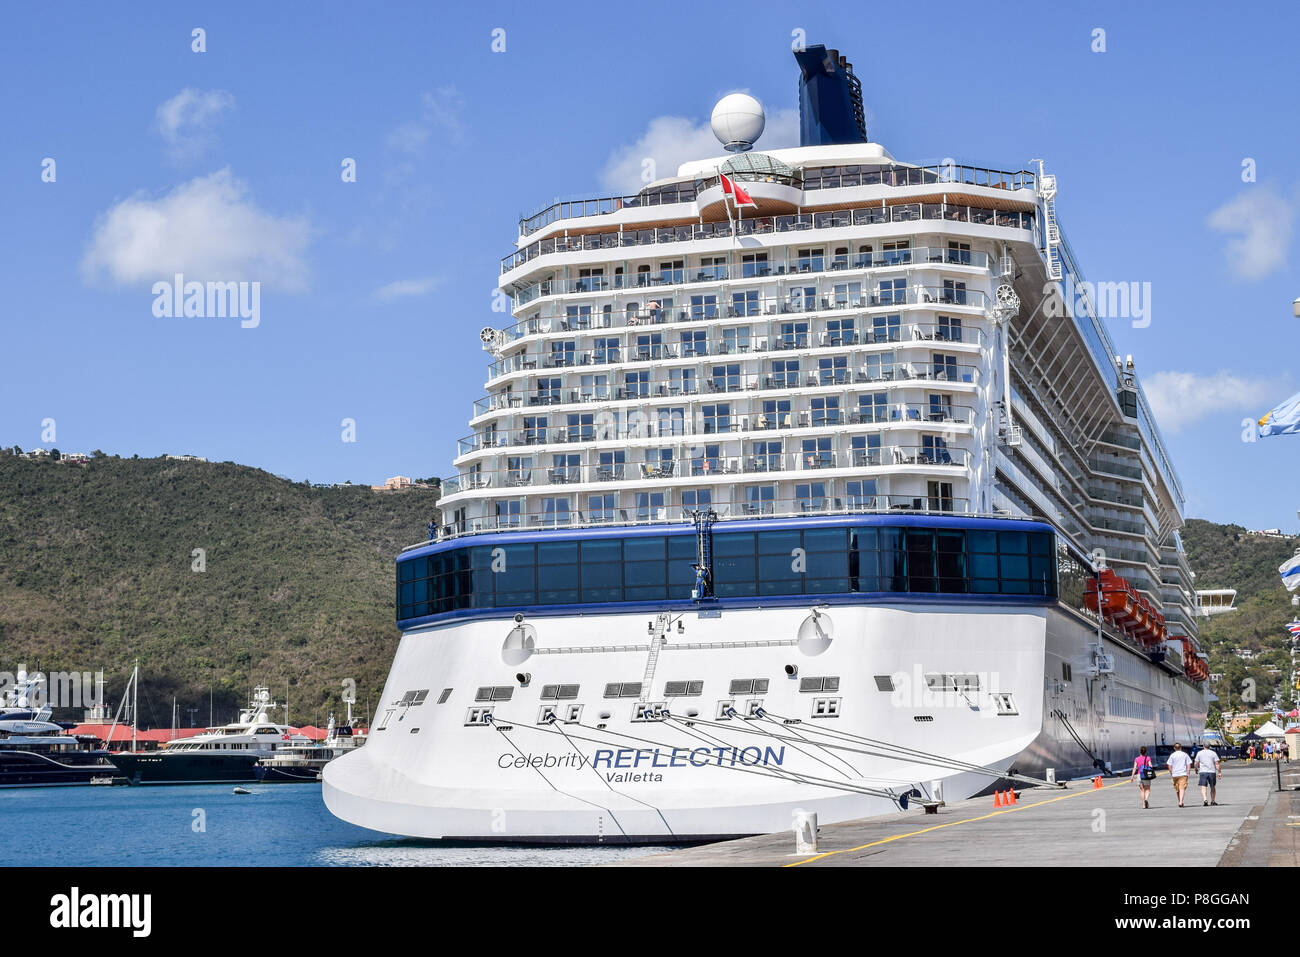 Saint Thomas, US Virgin Islands - April 01 2014: Celebrity Reflection Cruise Ship docked in the Saint Thomas Cruise Ship Port Terminal Stock Photo